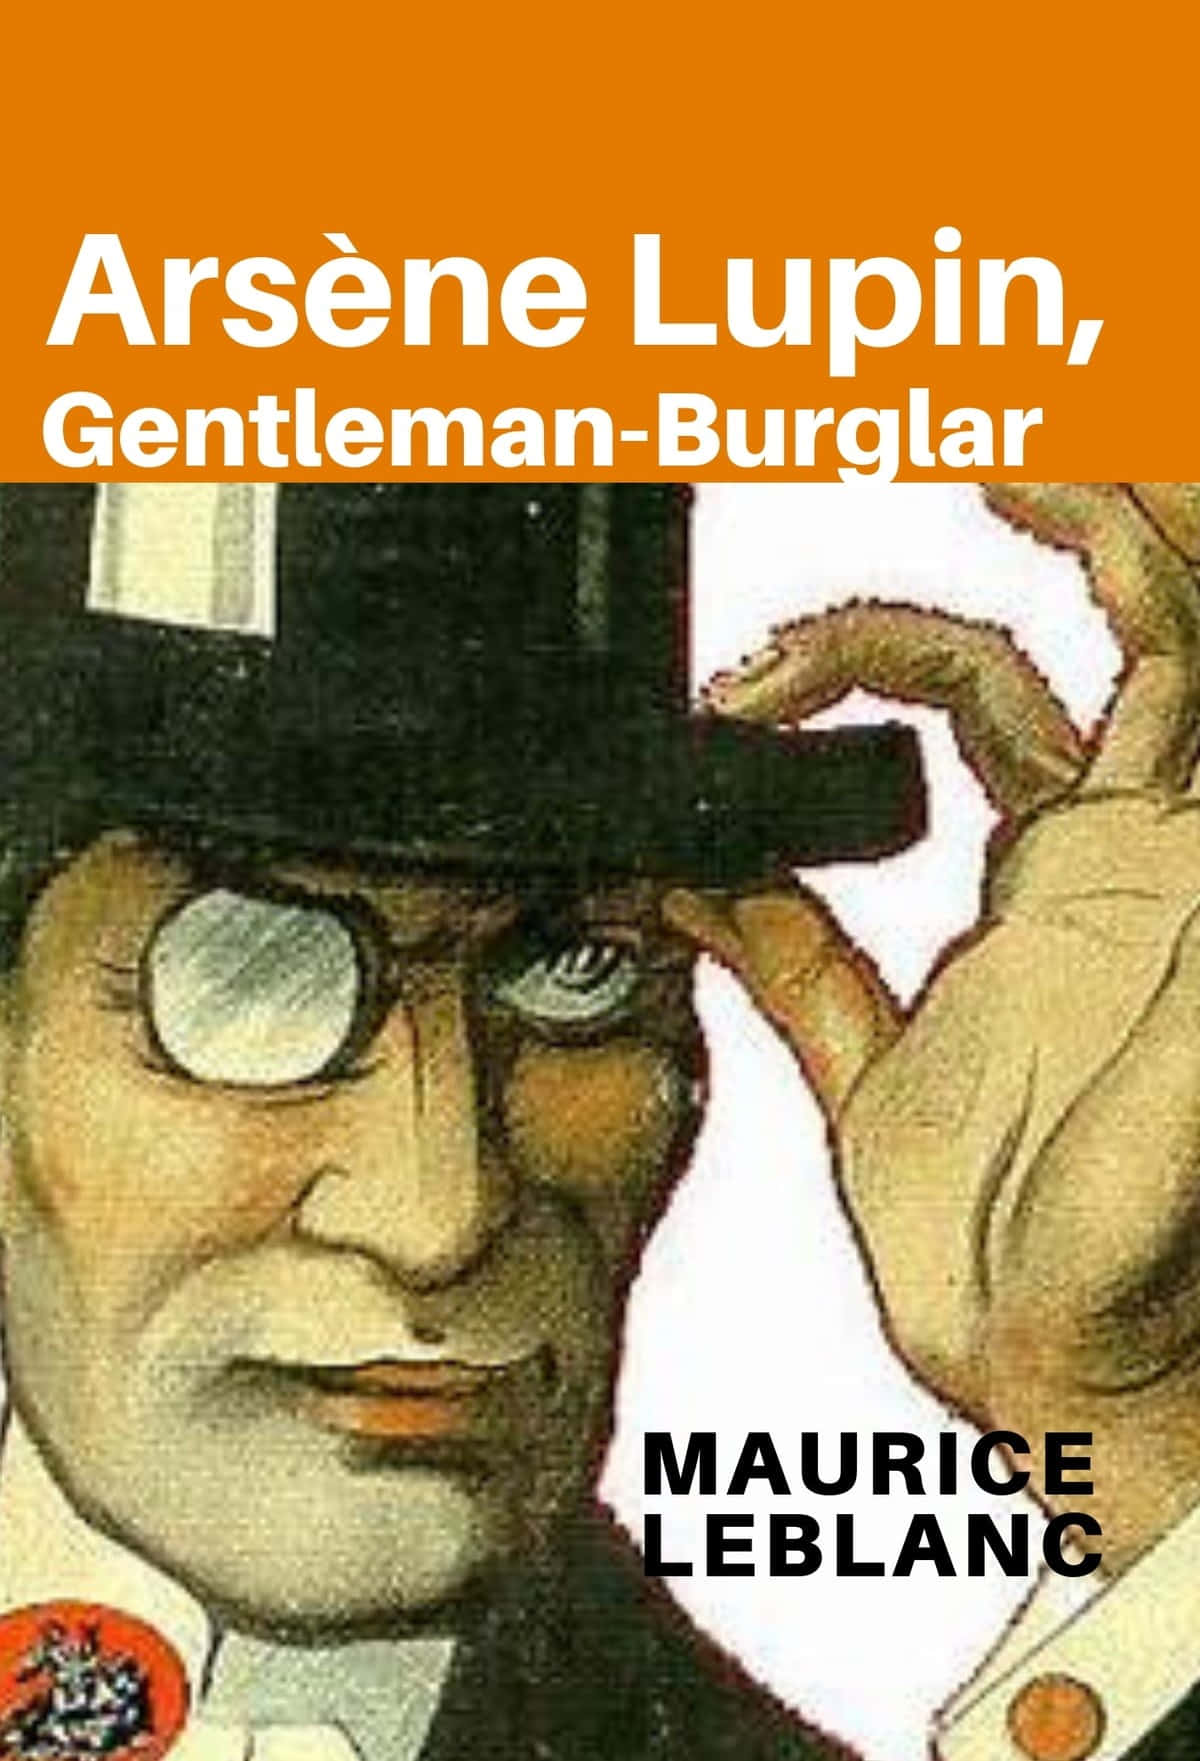 Arsène Lupin in stylish attire Wallpaper